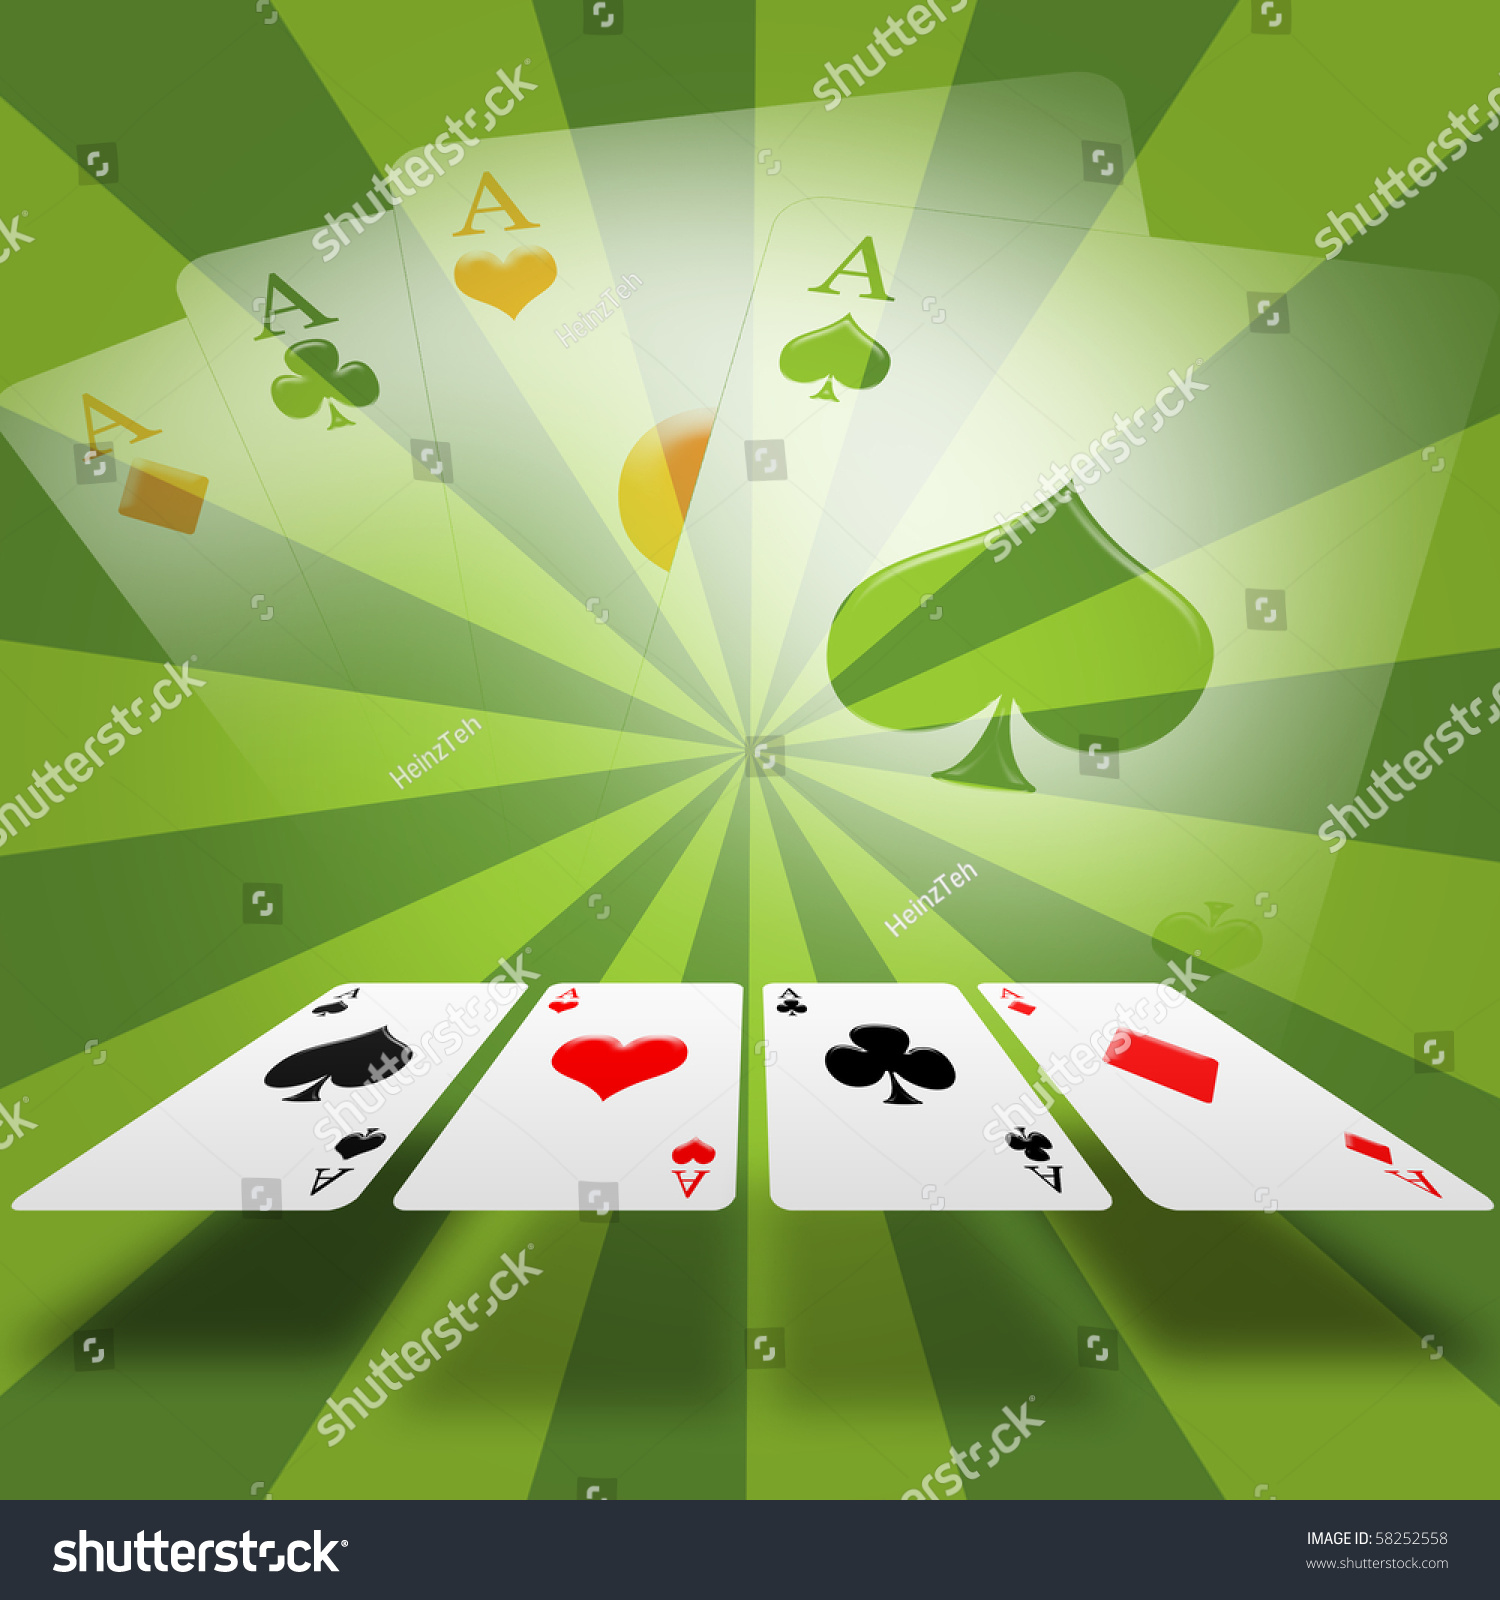 Illustration Of A Gambling Card - 58252558 : Shutterstock